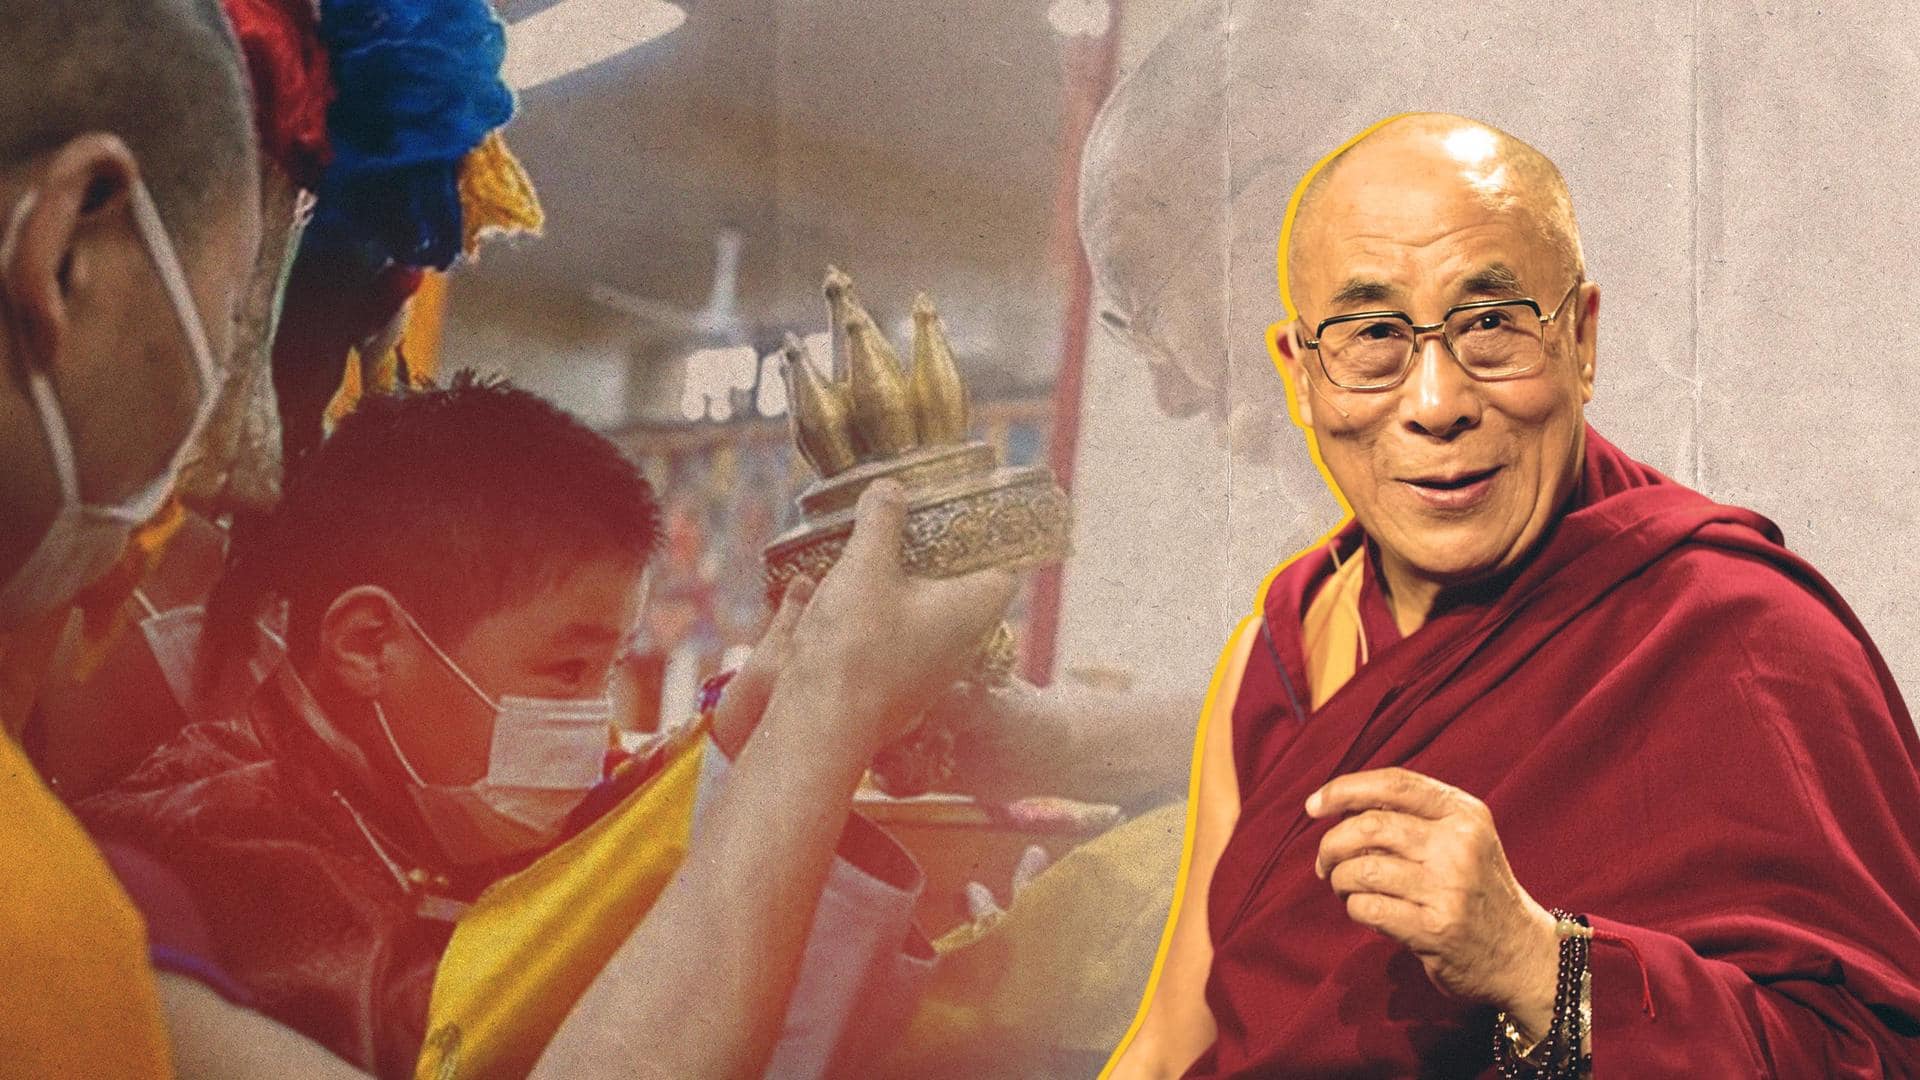 Dalai Lama names new Buddhist spiritual leader, China's reaction awaited